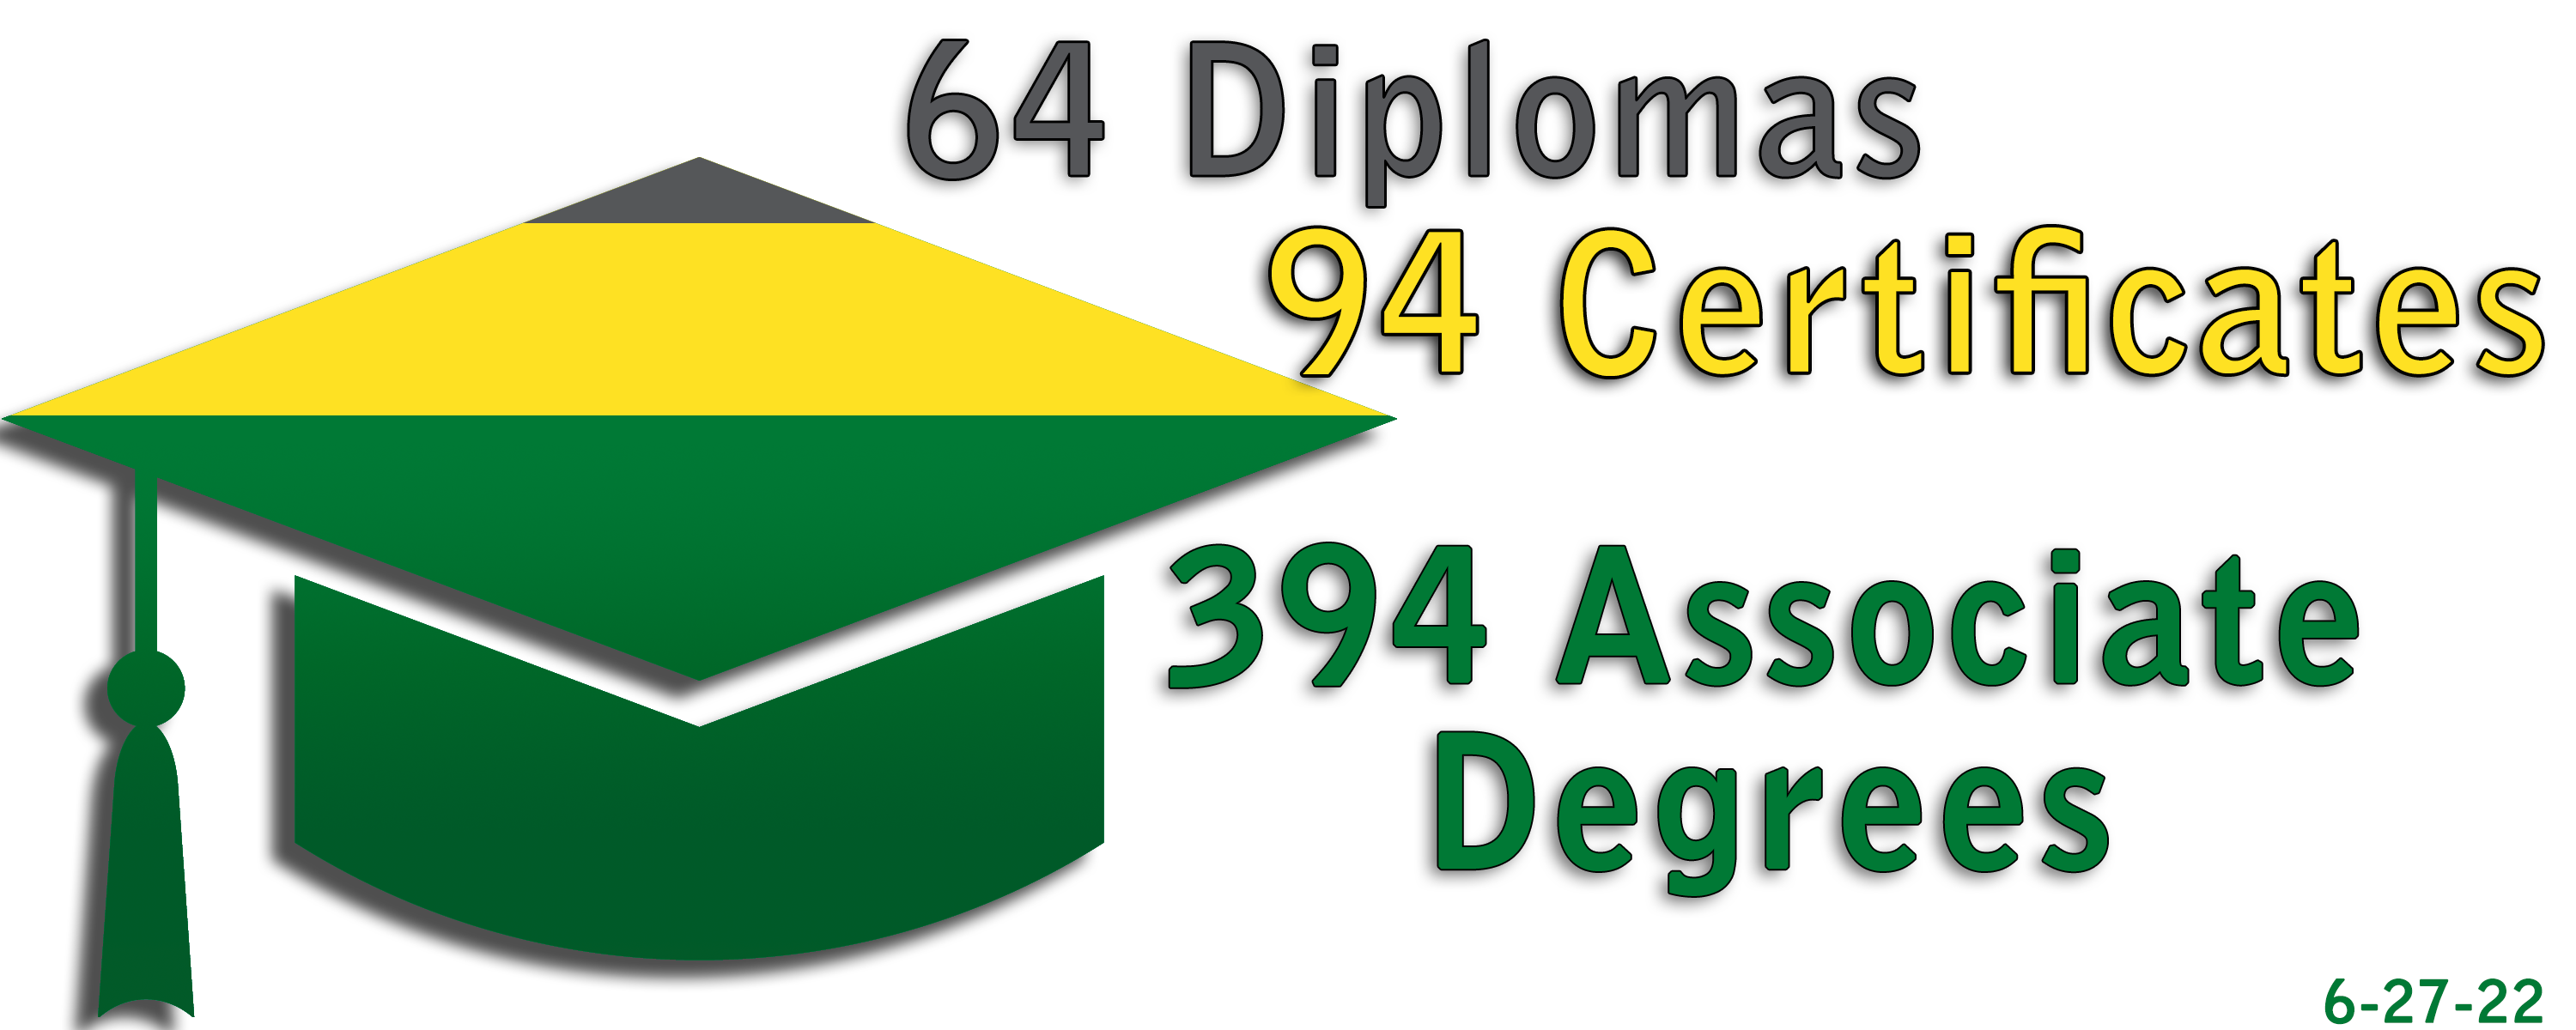 Green and yellow graduation cap - 64 Diplomas, 94 Certificates, 394 Associate Degrees